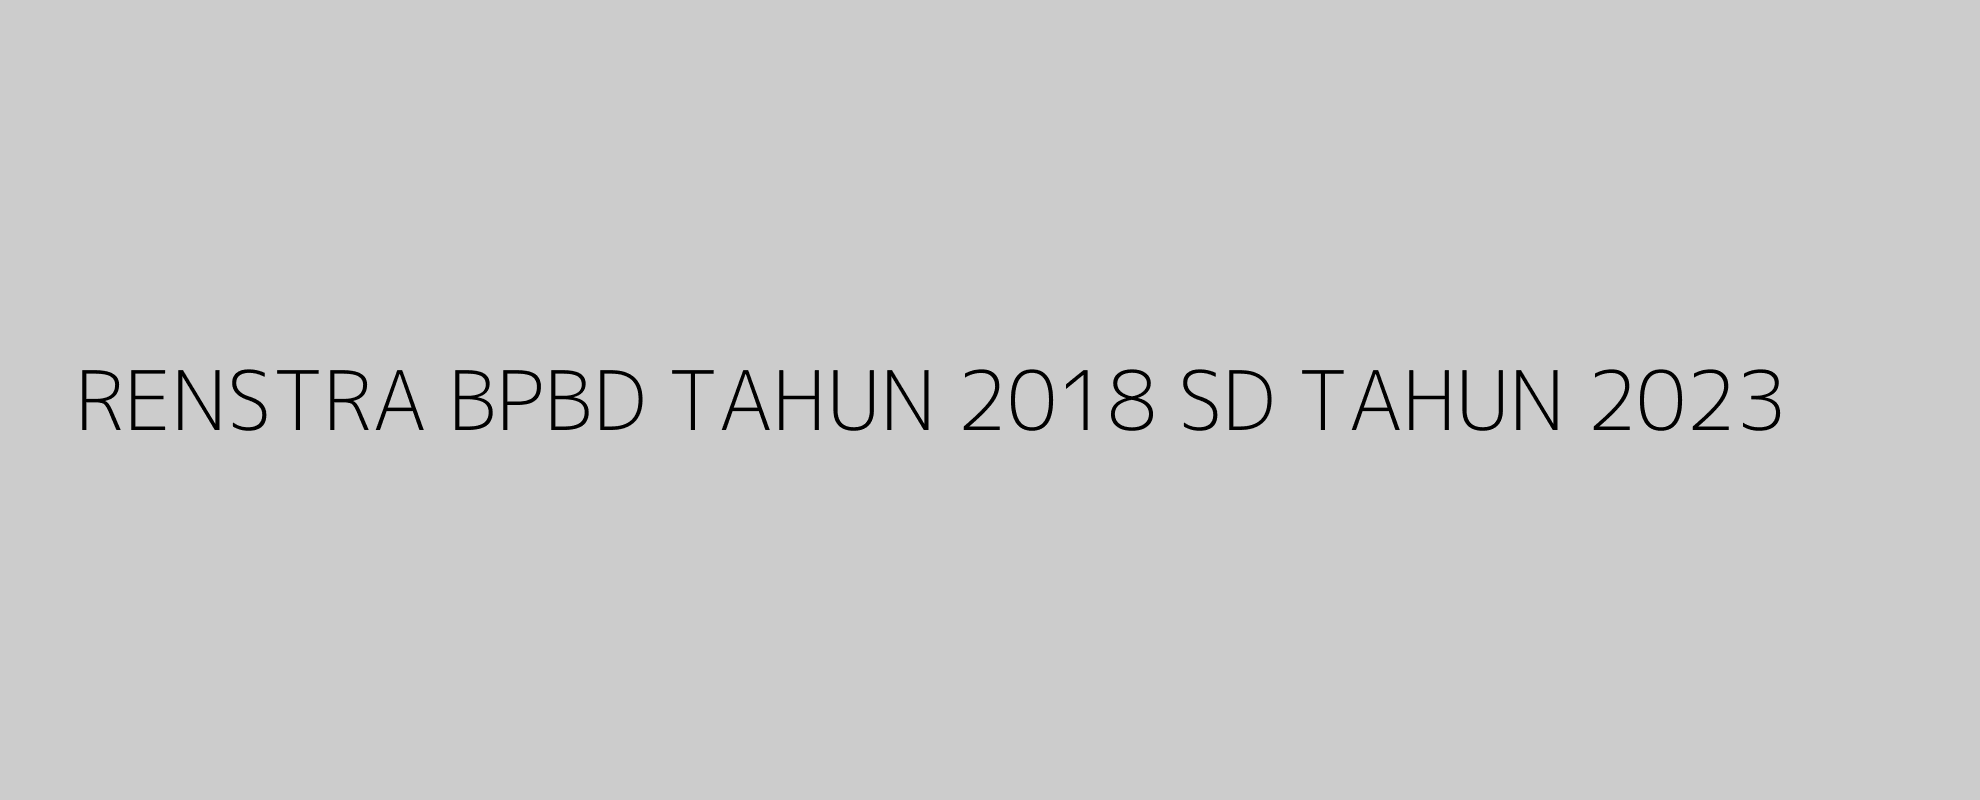 RENSTRA BPBD TAHUN 2018 SD TAHUN 2023